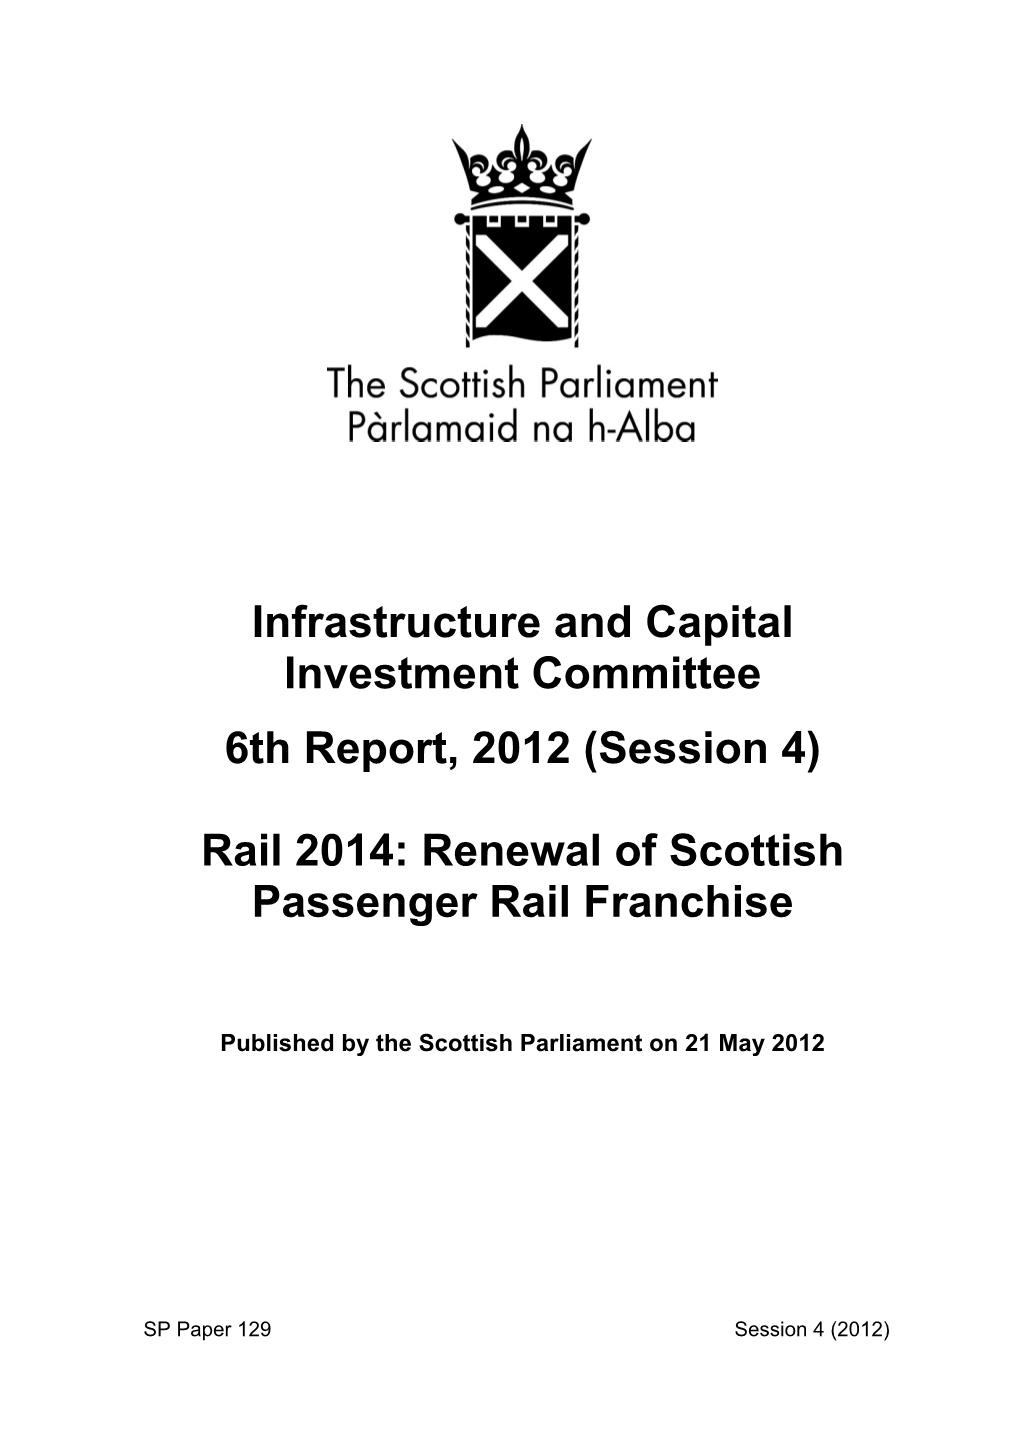 Rail 2014: Renewal of Scottish Passenger Rail Franchise